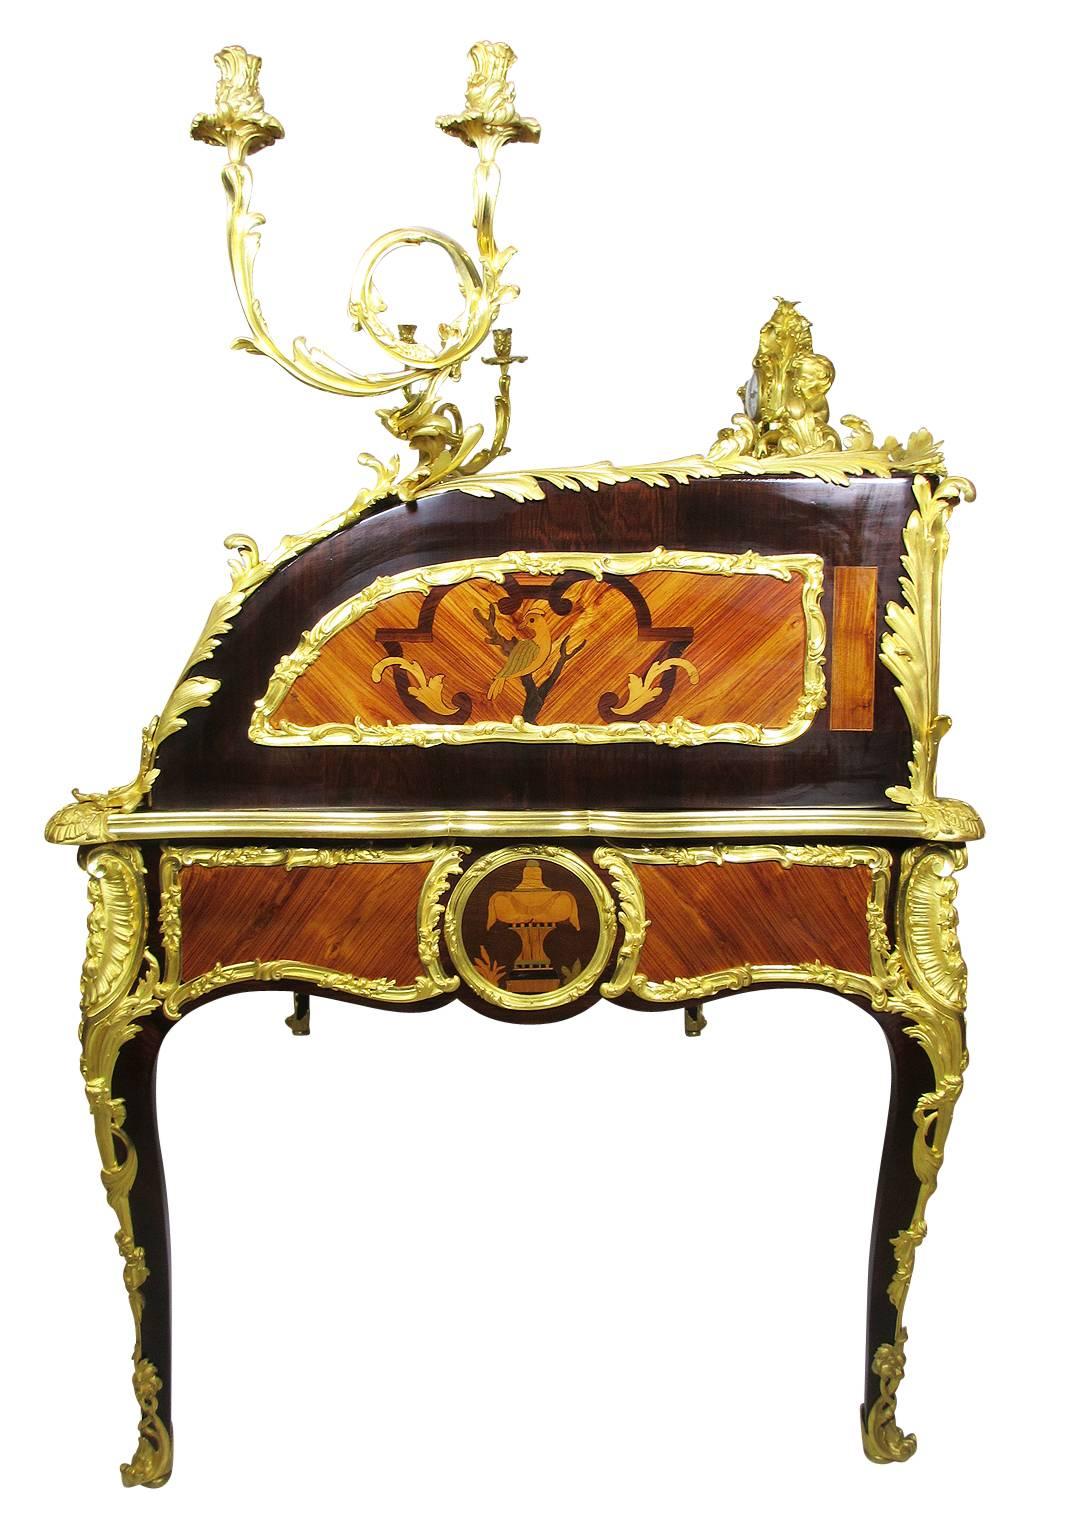 Ormolu French 19th-Century Louis XV Style Figural Gilt-Bronze Mounted Bureau-Plat Desk For Sale